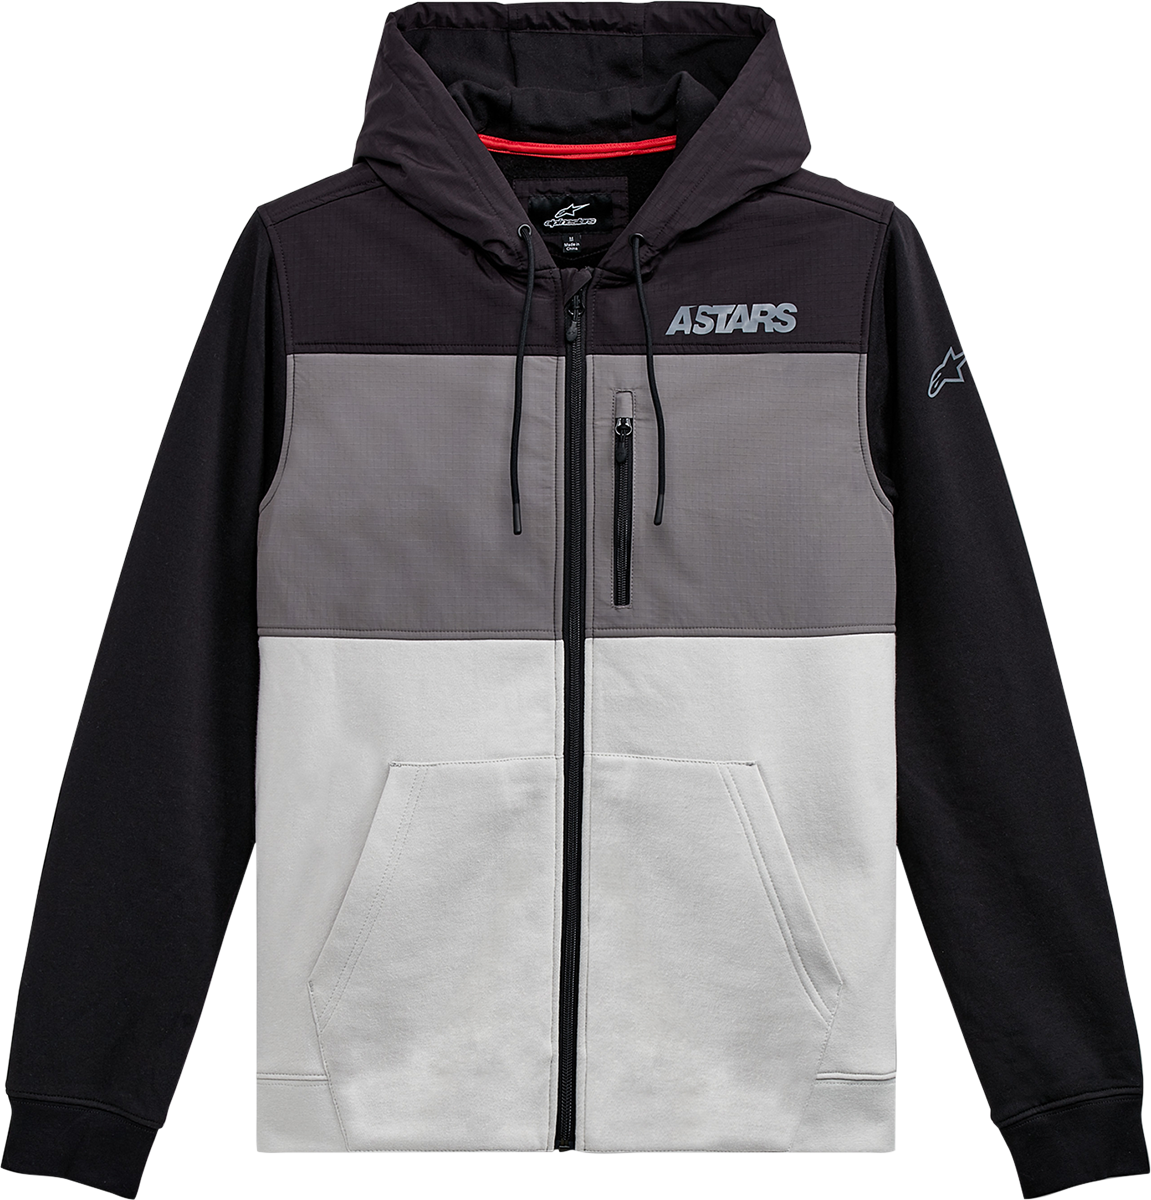 ALPINESTARS Elevate Jacket - Black/Silver - Medium 1212-112001900M